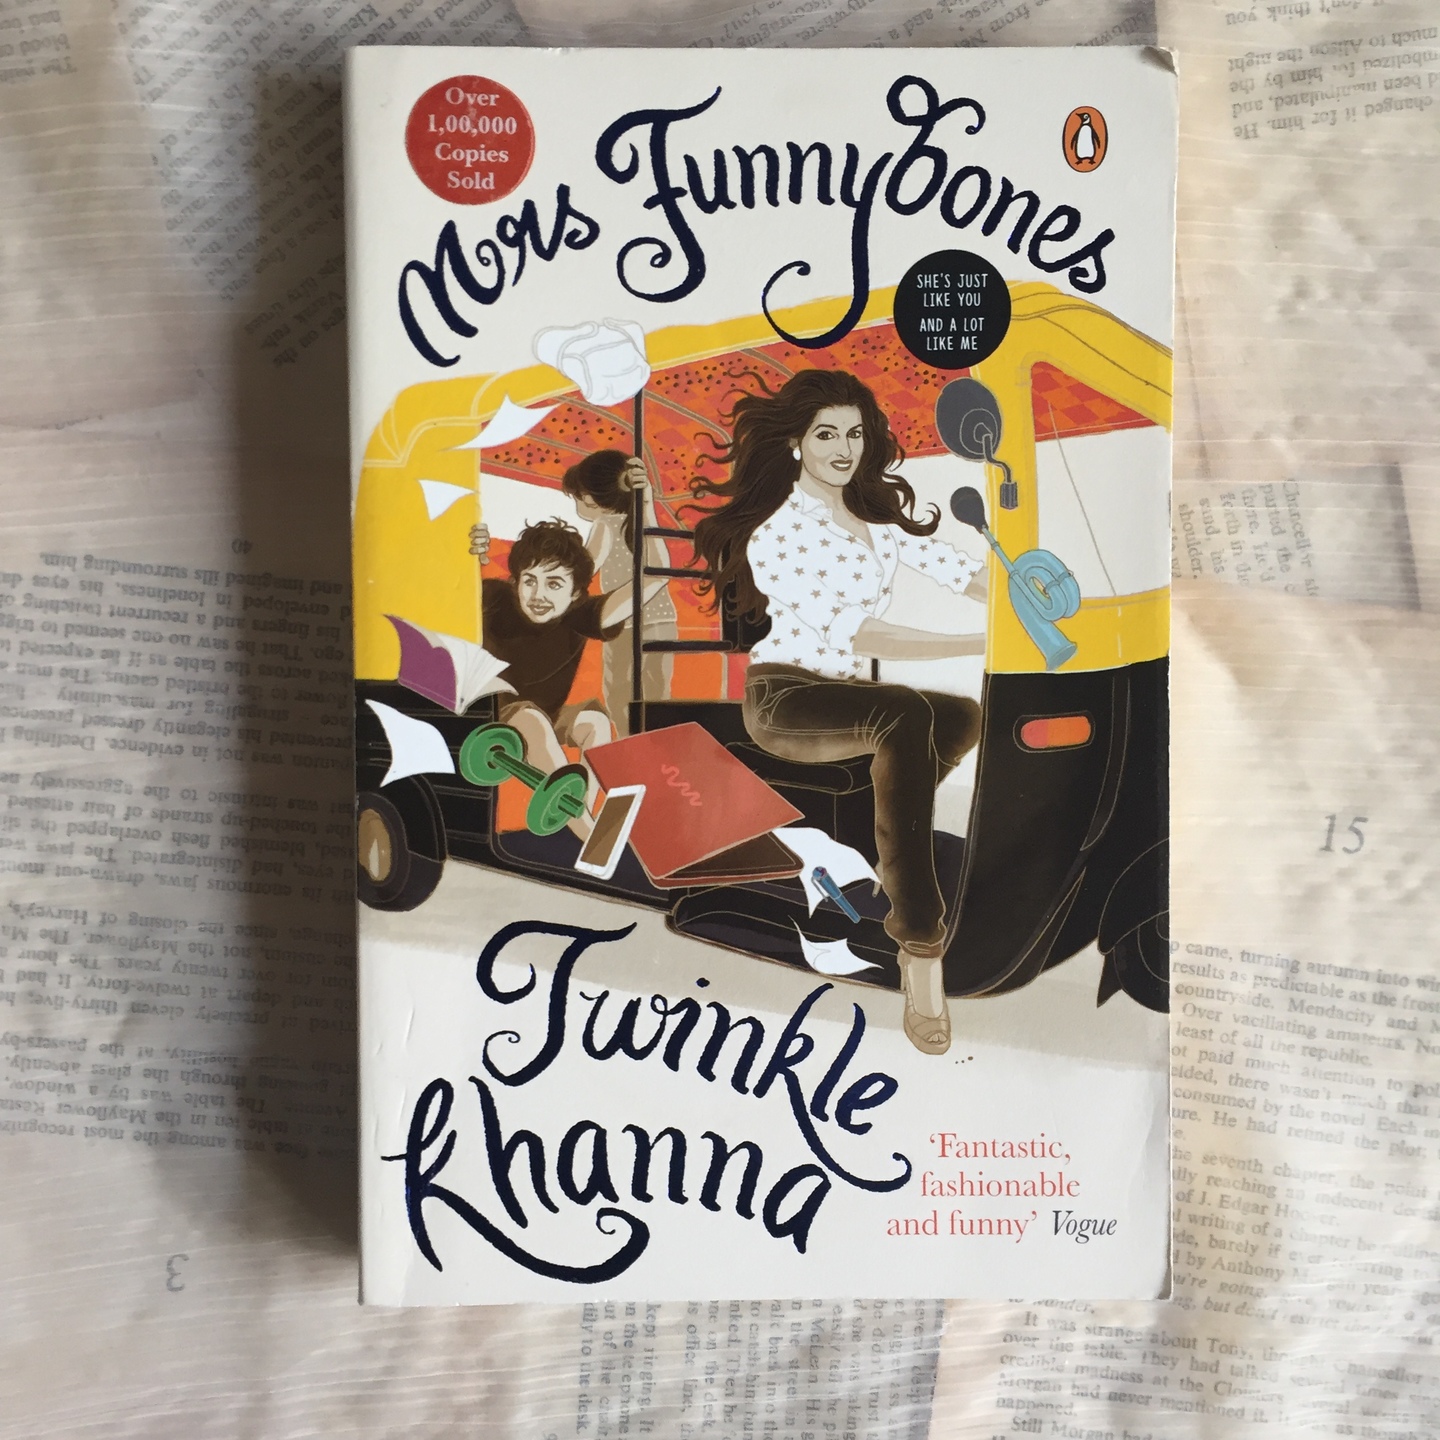 Mrs Funny Bones by Twinkle Khanna [Paperback]